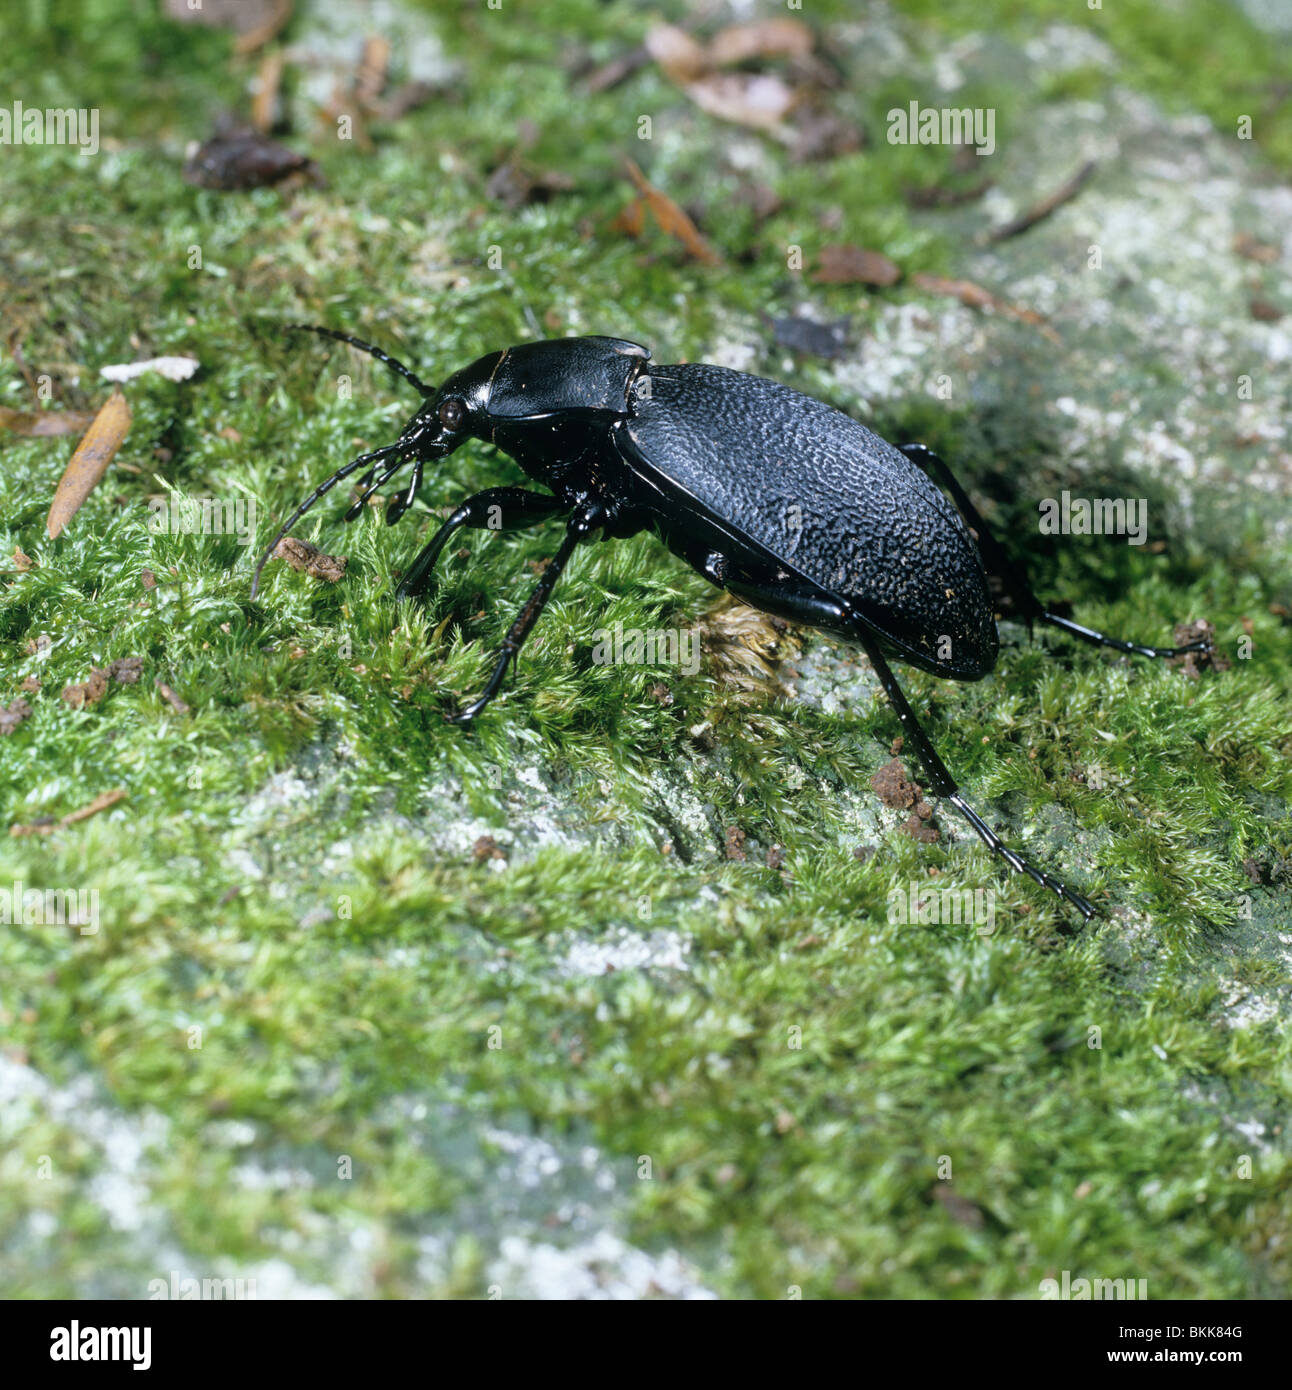 Leatherback Ground Beetle (Carabus coriaceus), adult on moss. Stock Photo